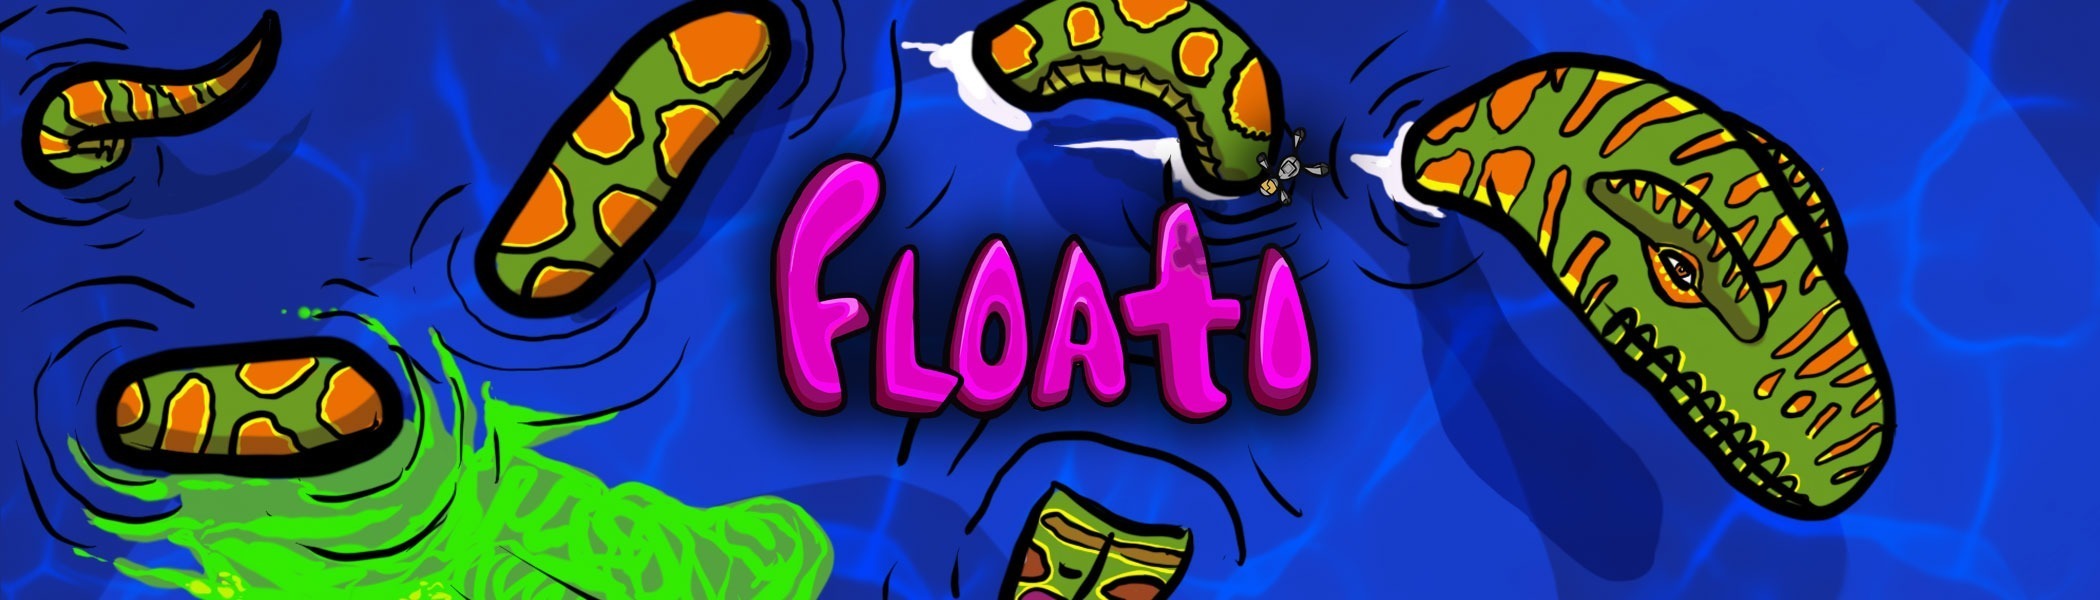 Floati_io banner